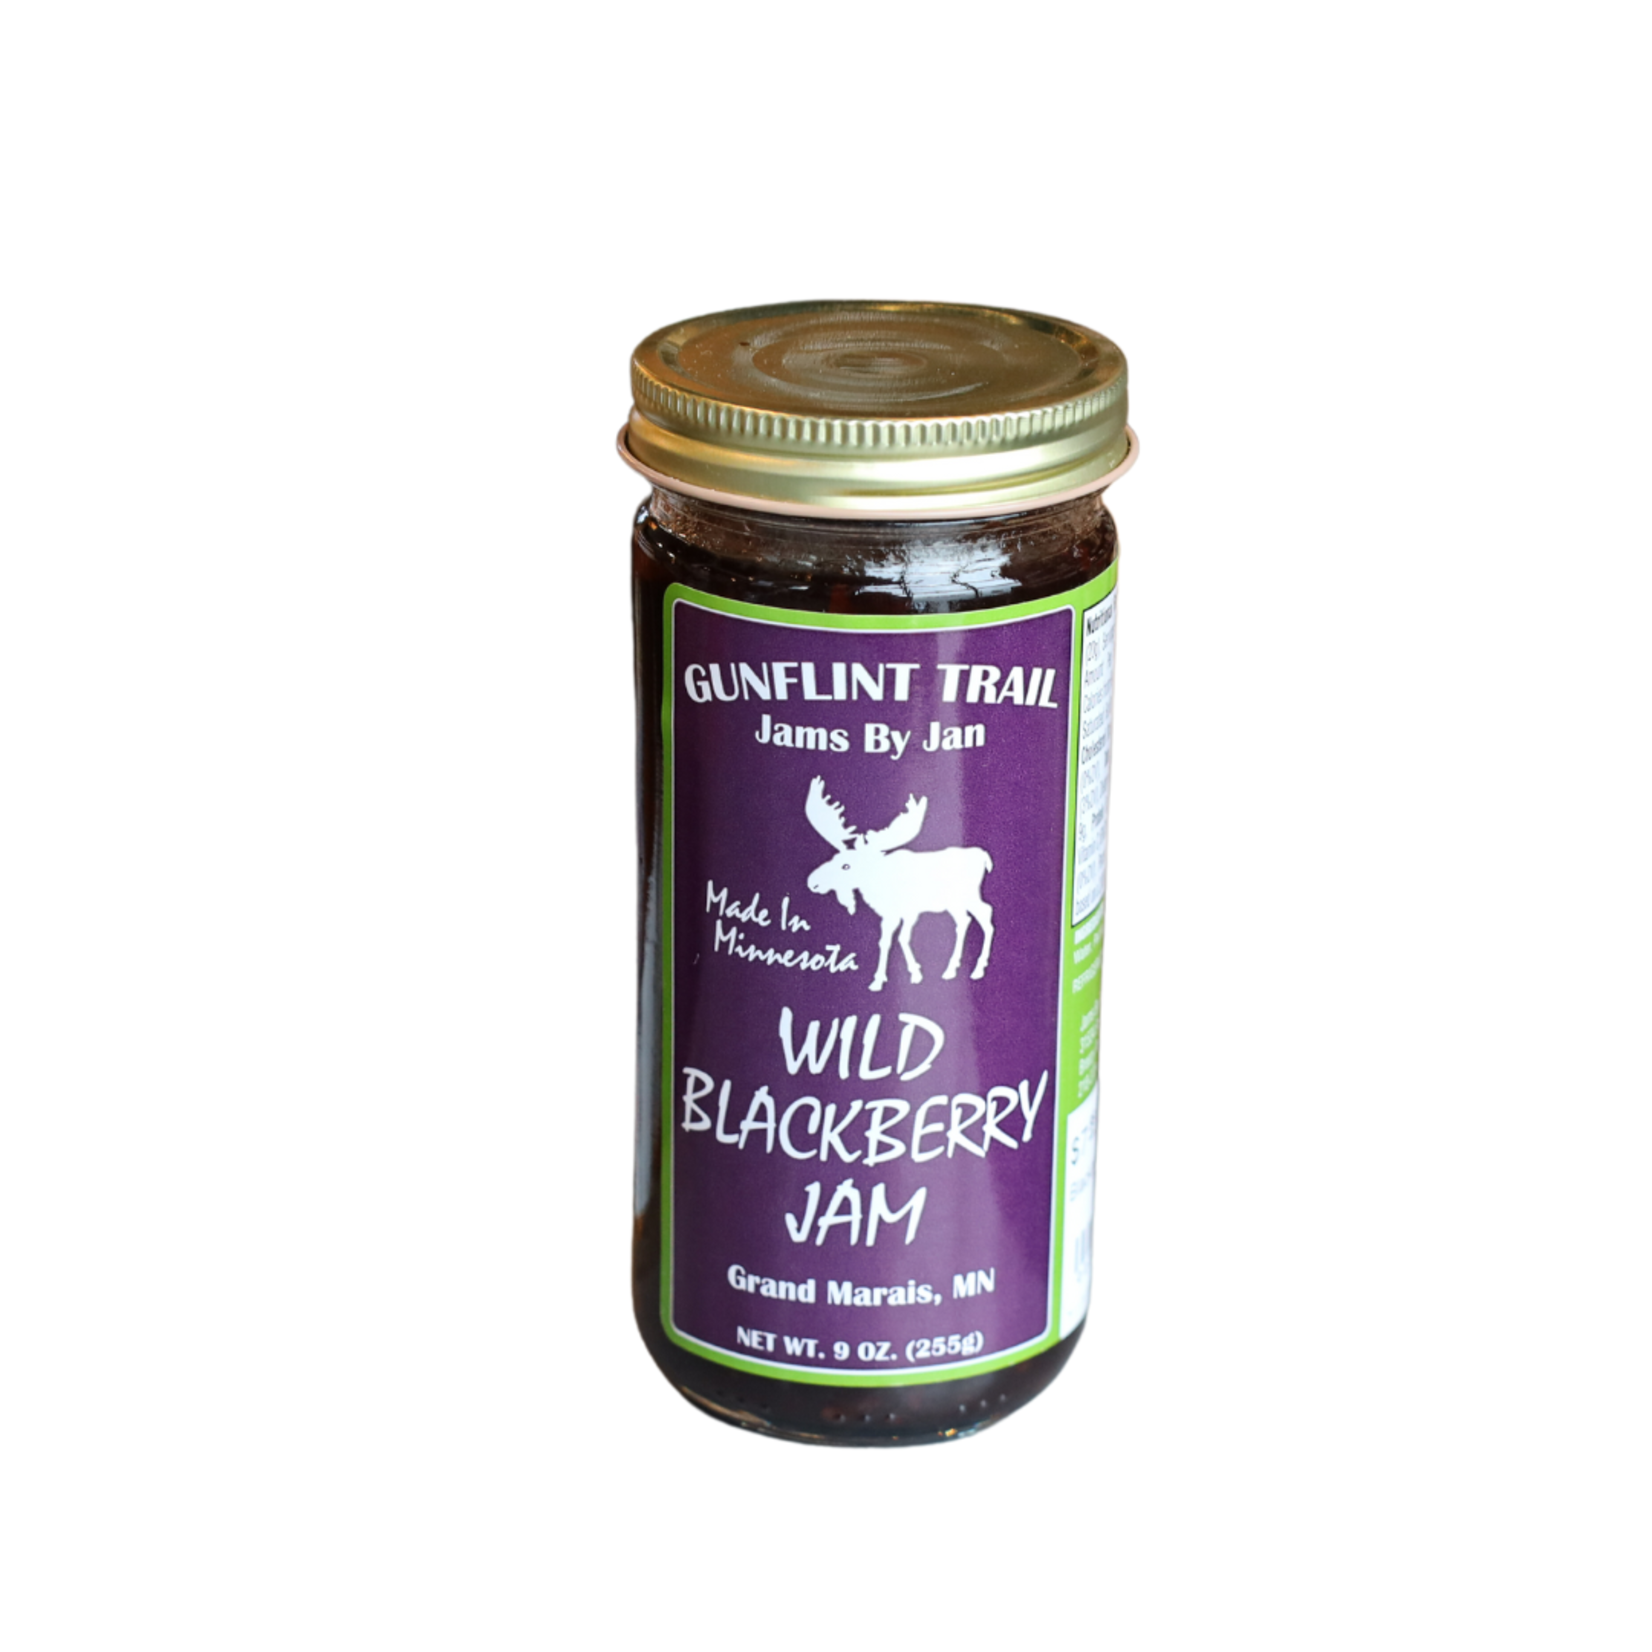 Jams By Jan Gunflint Trail Jam, Wild Blackberry Jam